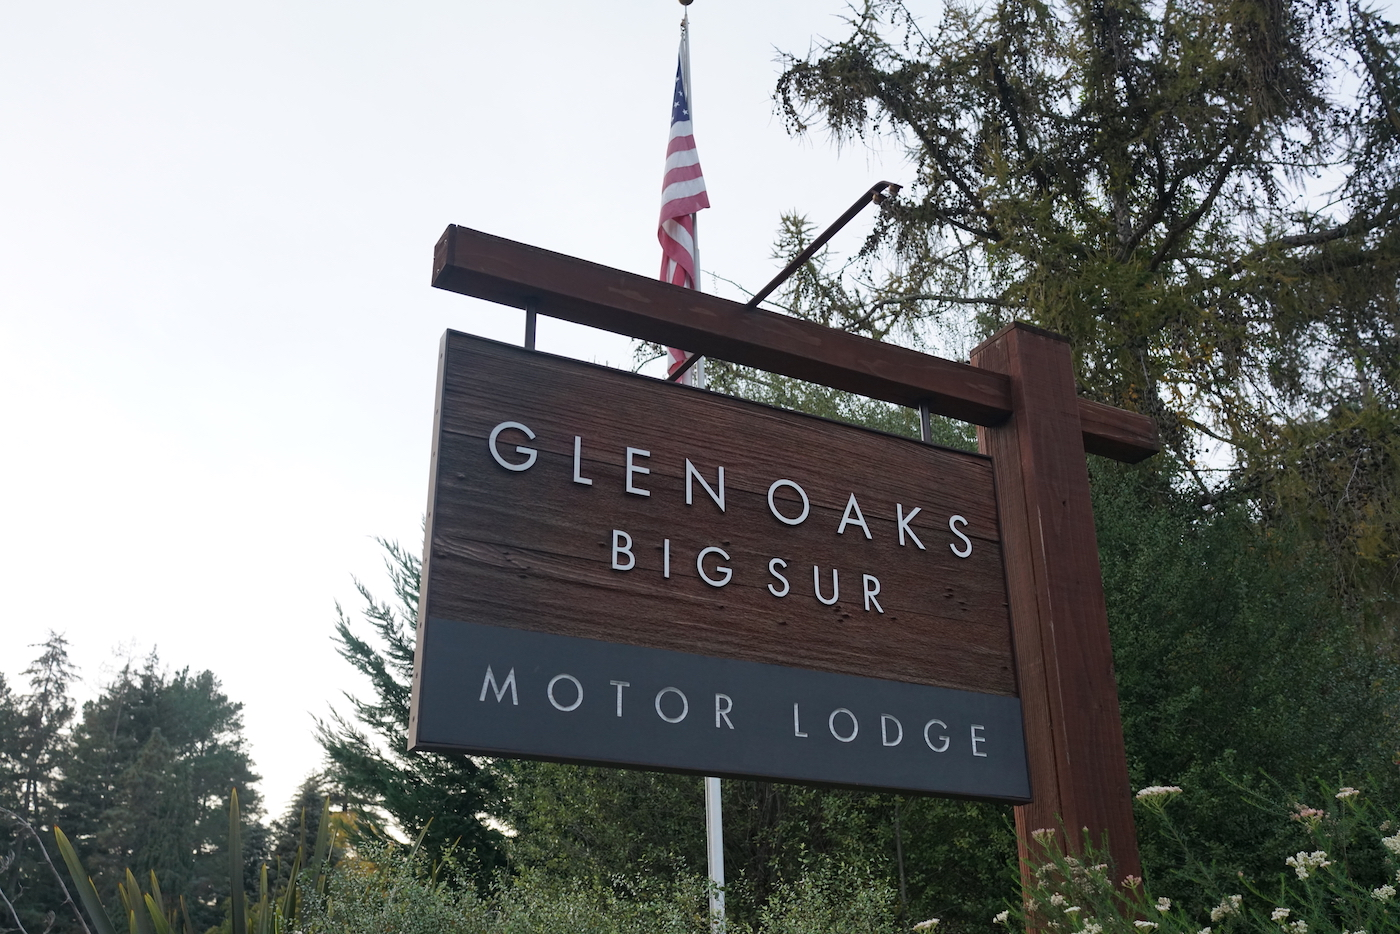 Hotel Love: Rustic Meets Modern at Glen Oaks Lodge in Big Sur